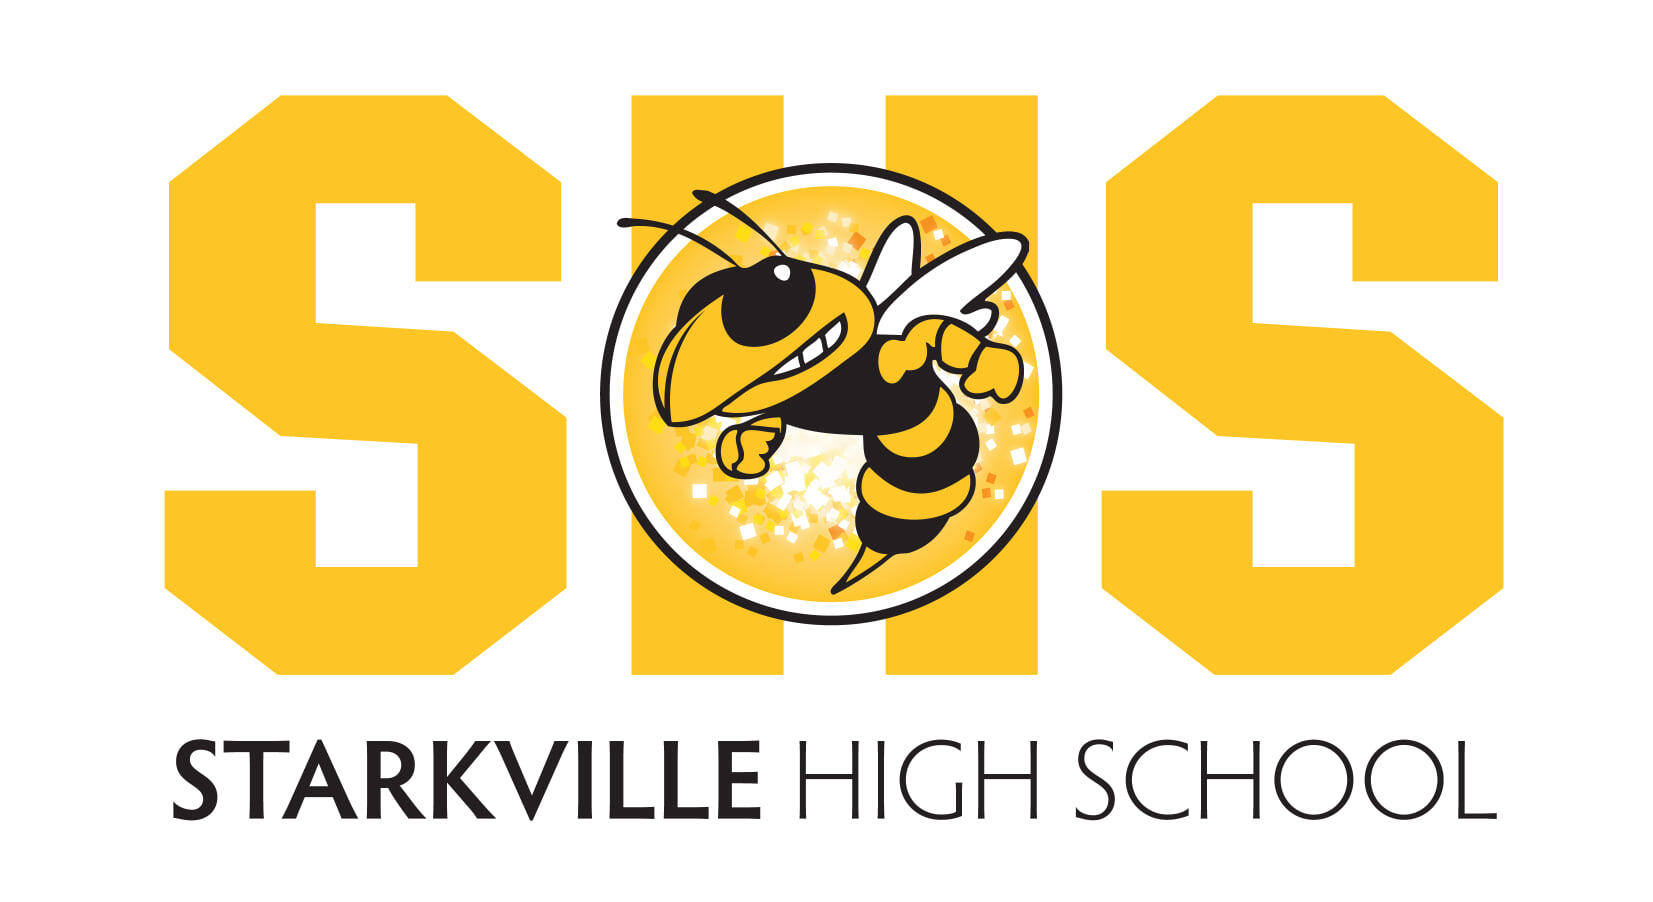 Starkville High School logo